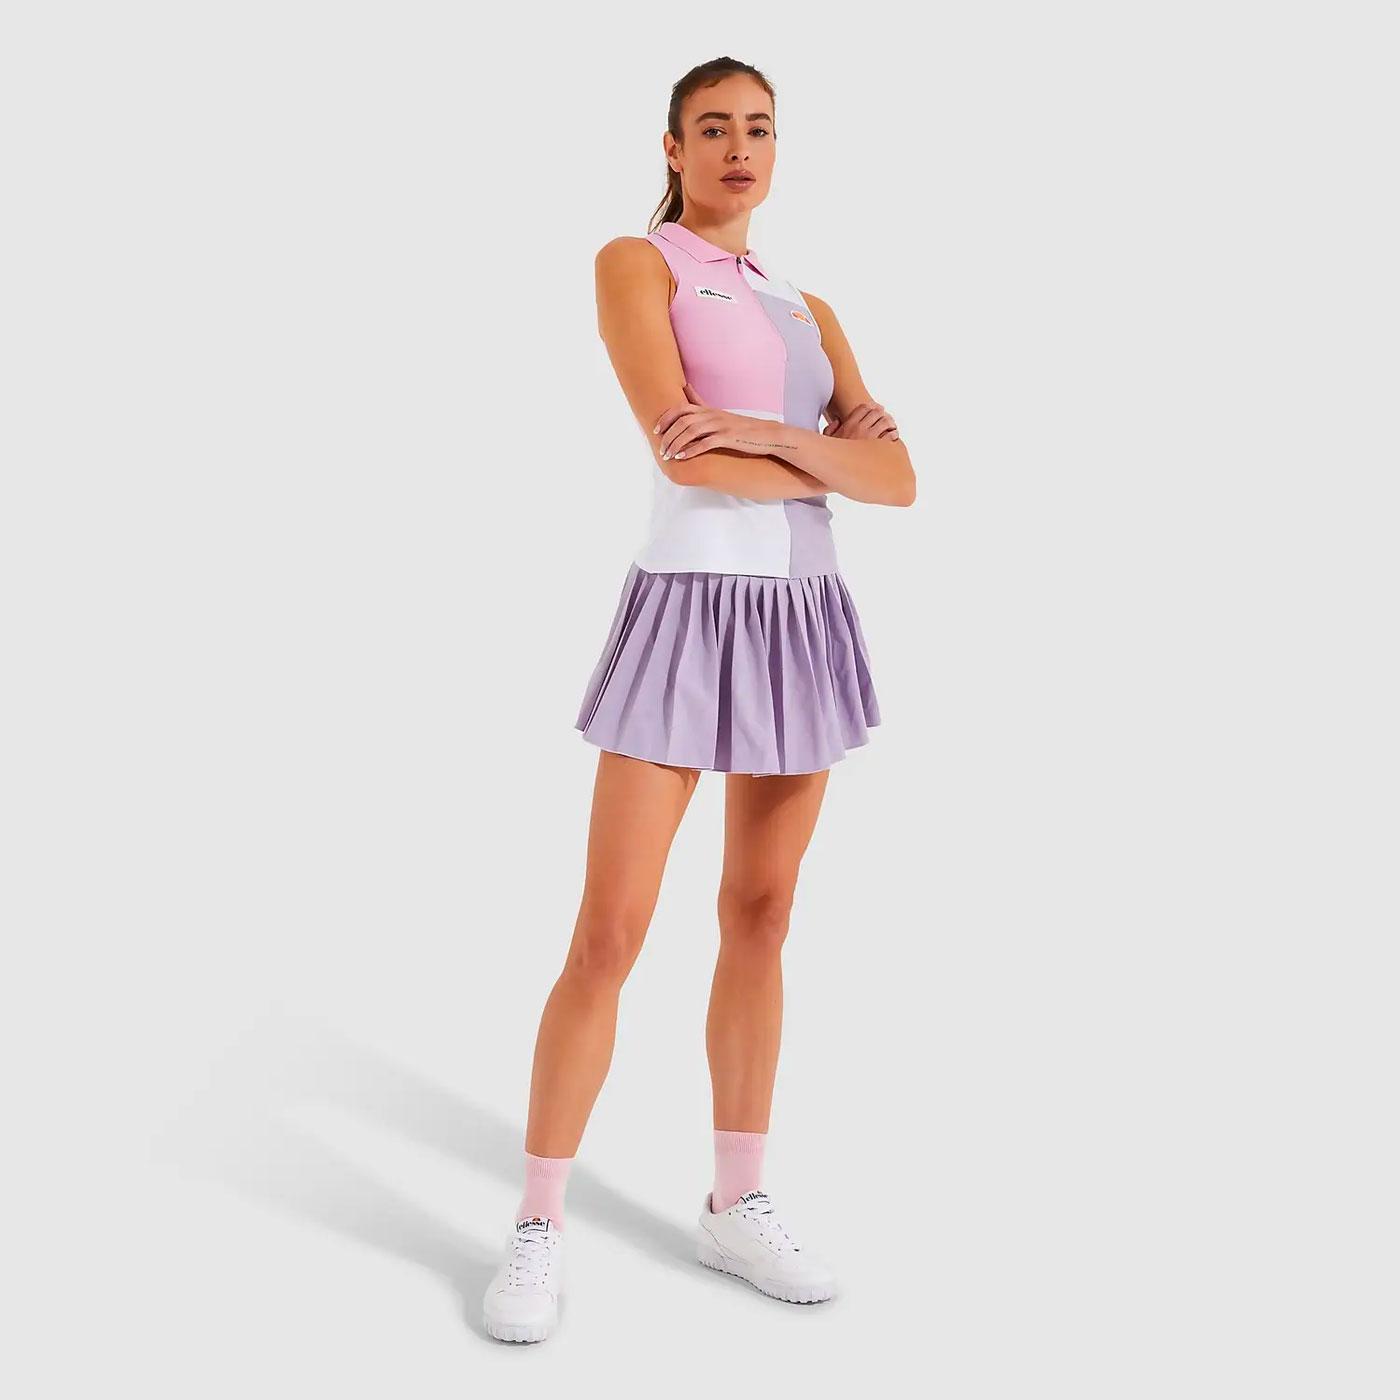 Stiorra Ellesse Shorts Retro Purple in Skort Tennis 80s